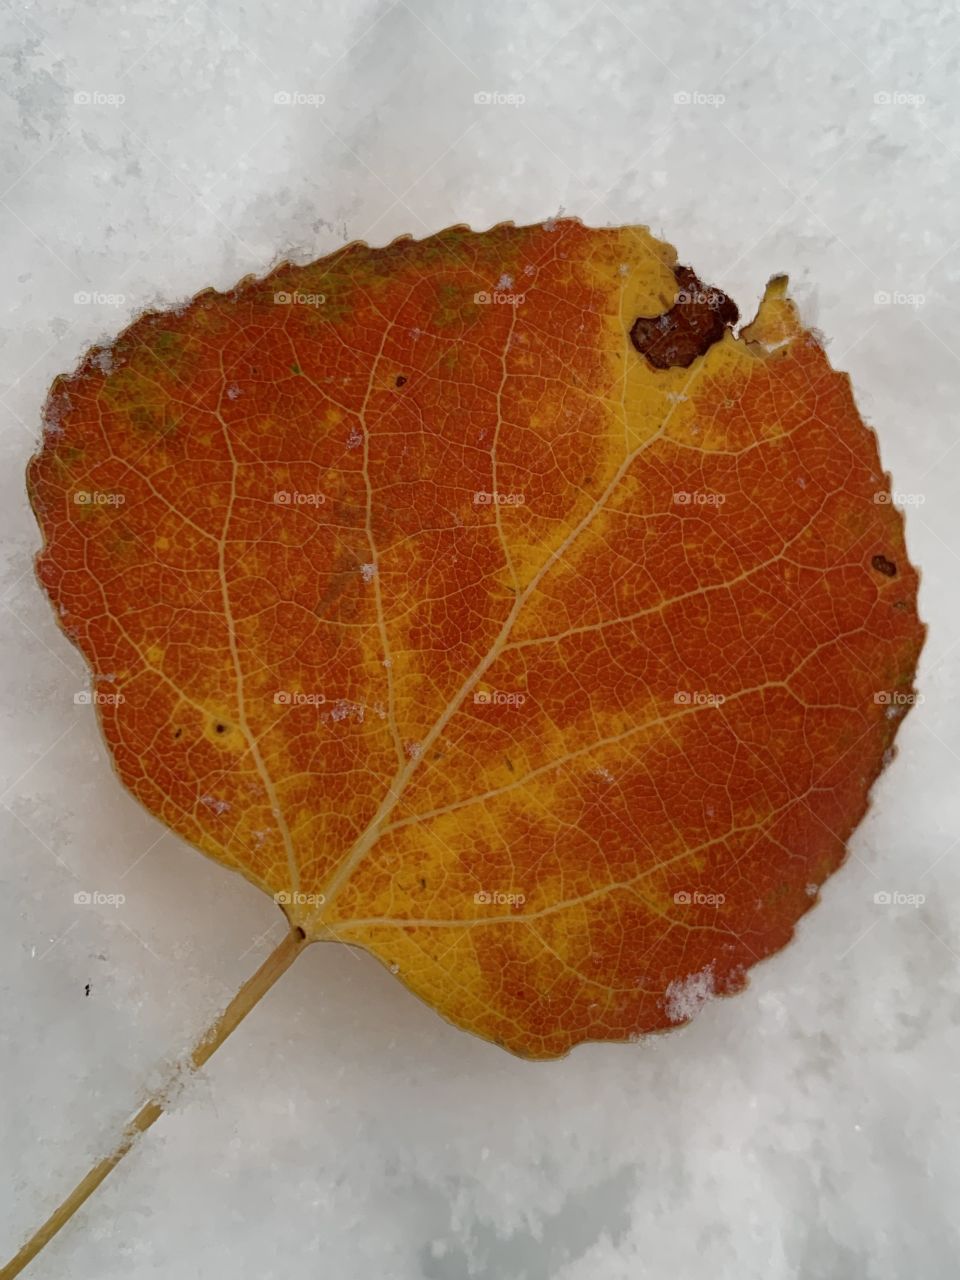 Closeup of a leaf on snow 